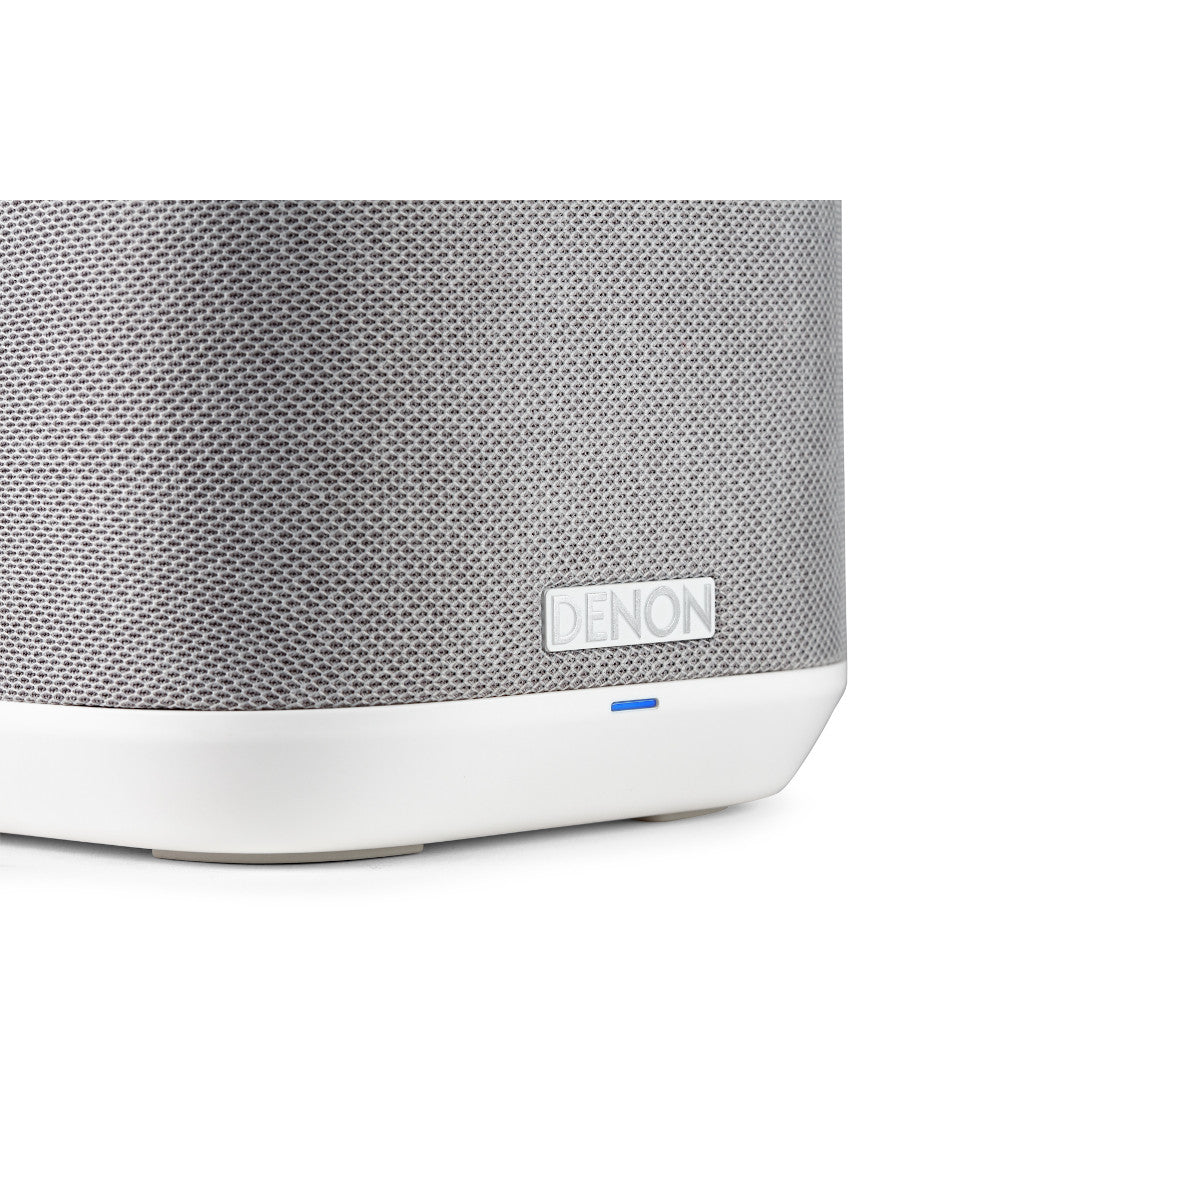 Denon Home 150 Wireless Streaming Speaker (White)